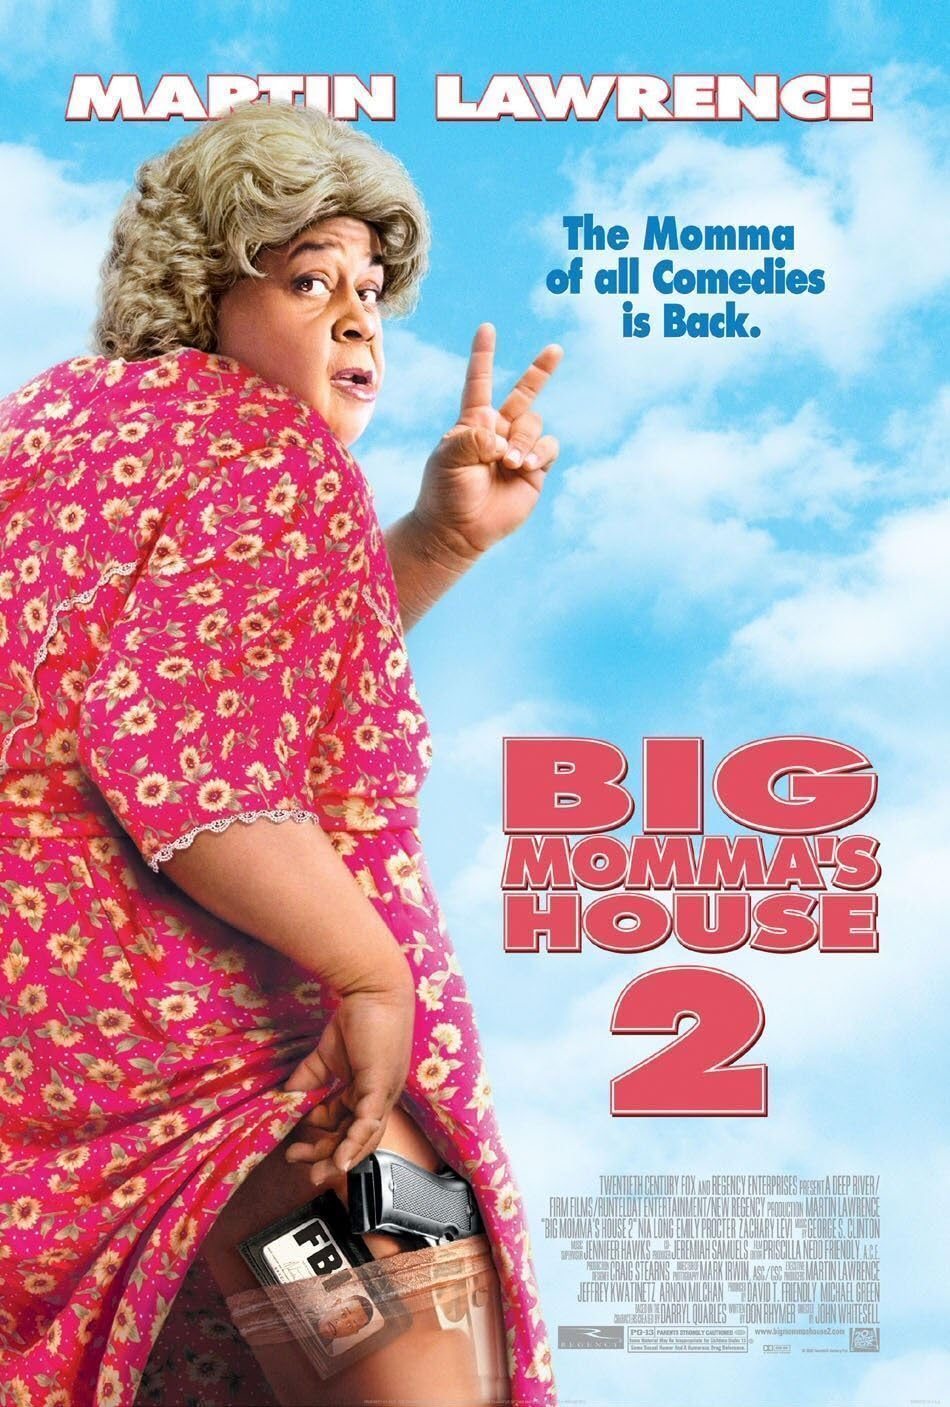 Big Momma's House 2 Poster 27x40 Martin Lawrence Elton LeBlanc Nia Long